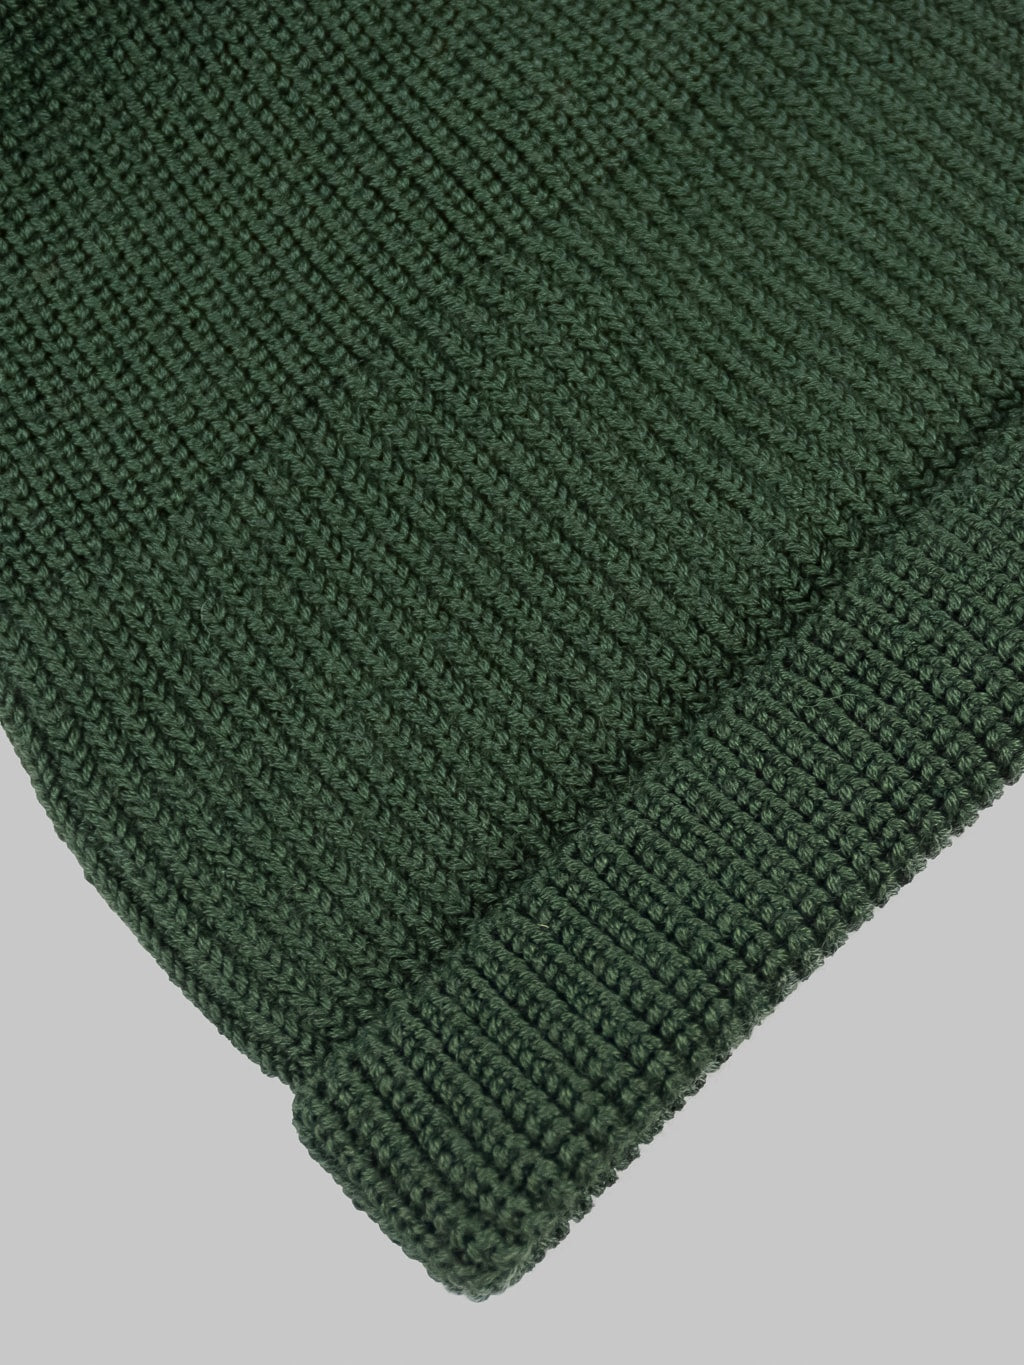 Mr Fatman Merino Wool Roll Watch Cap green texture